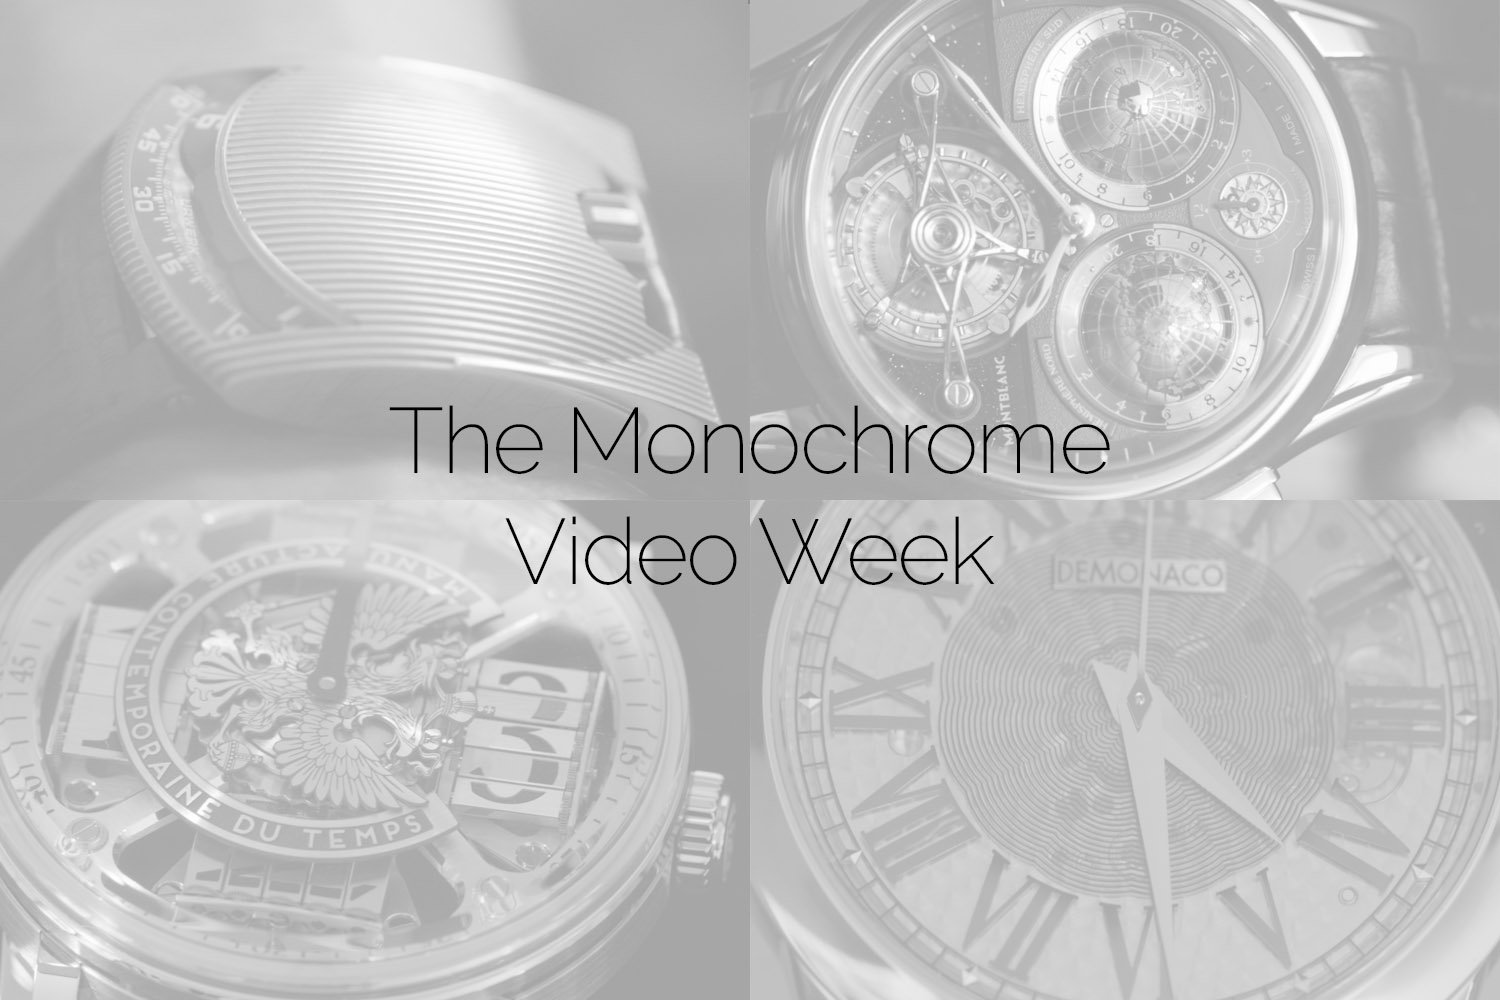 The Monochrome Video Week